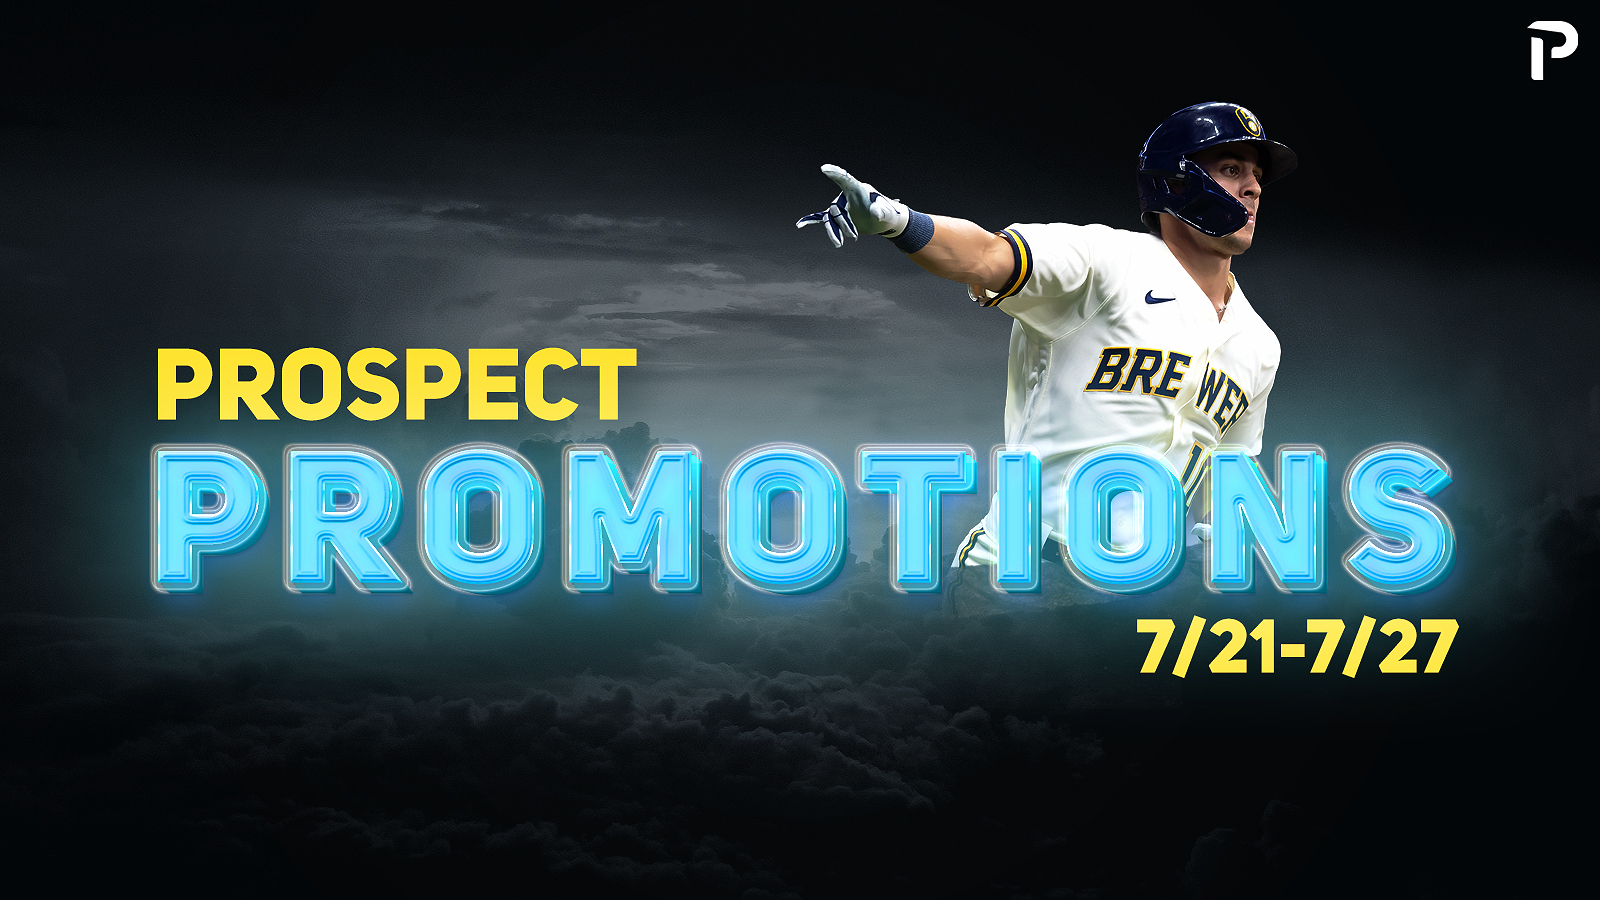 Prospect Promotions 7/21-7/27